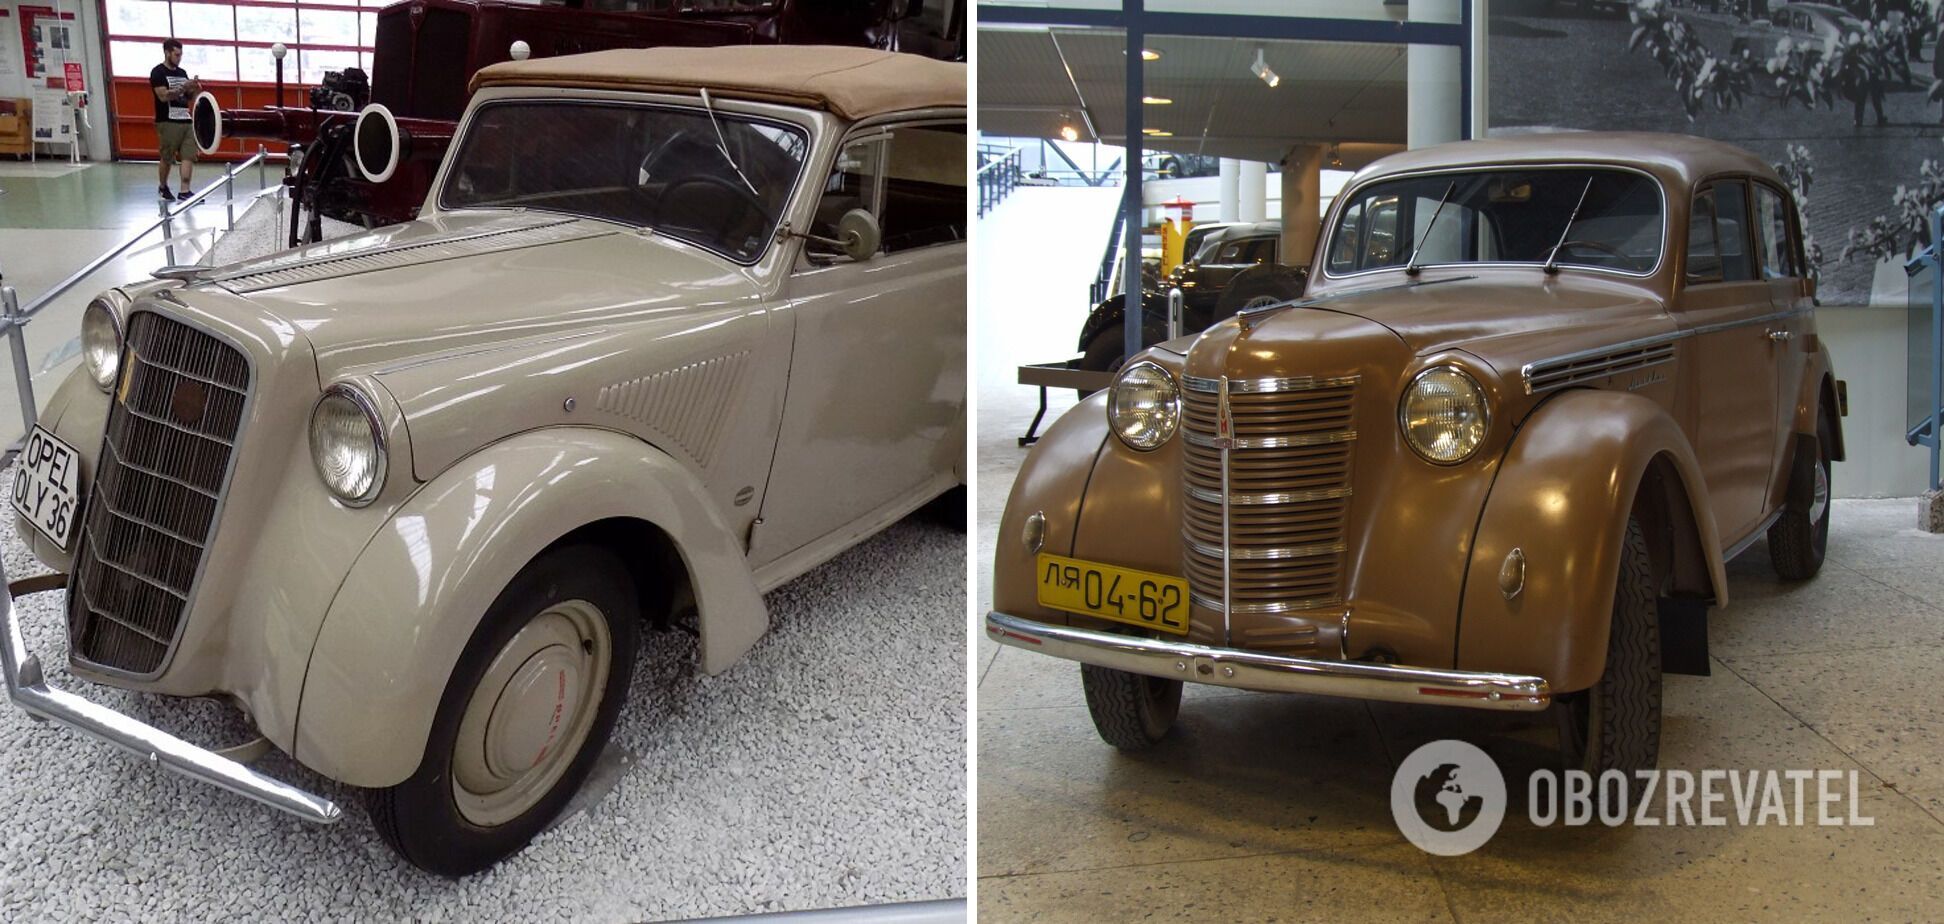 Слева – немецкий Opel Kadett К38 (1938 год), а справа – советский Москвич 400 (1946 год).